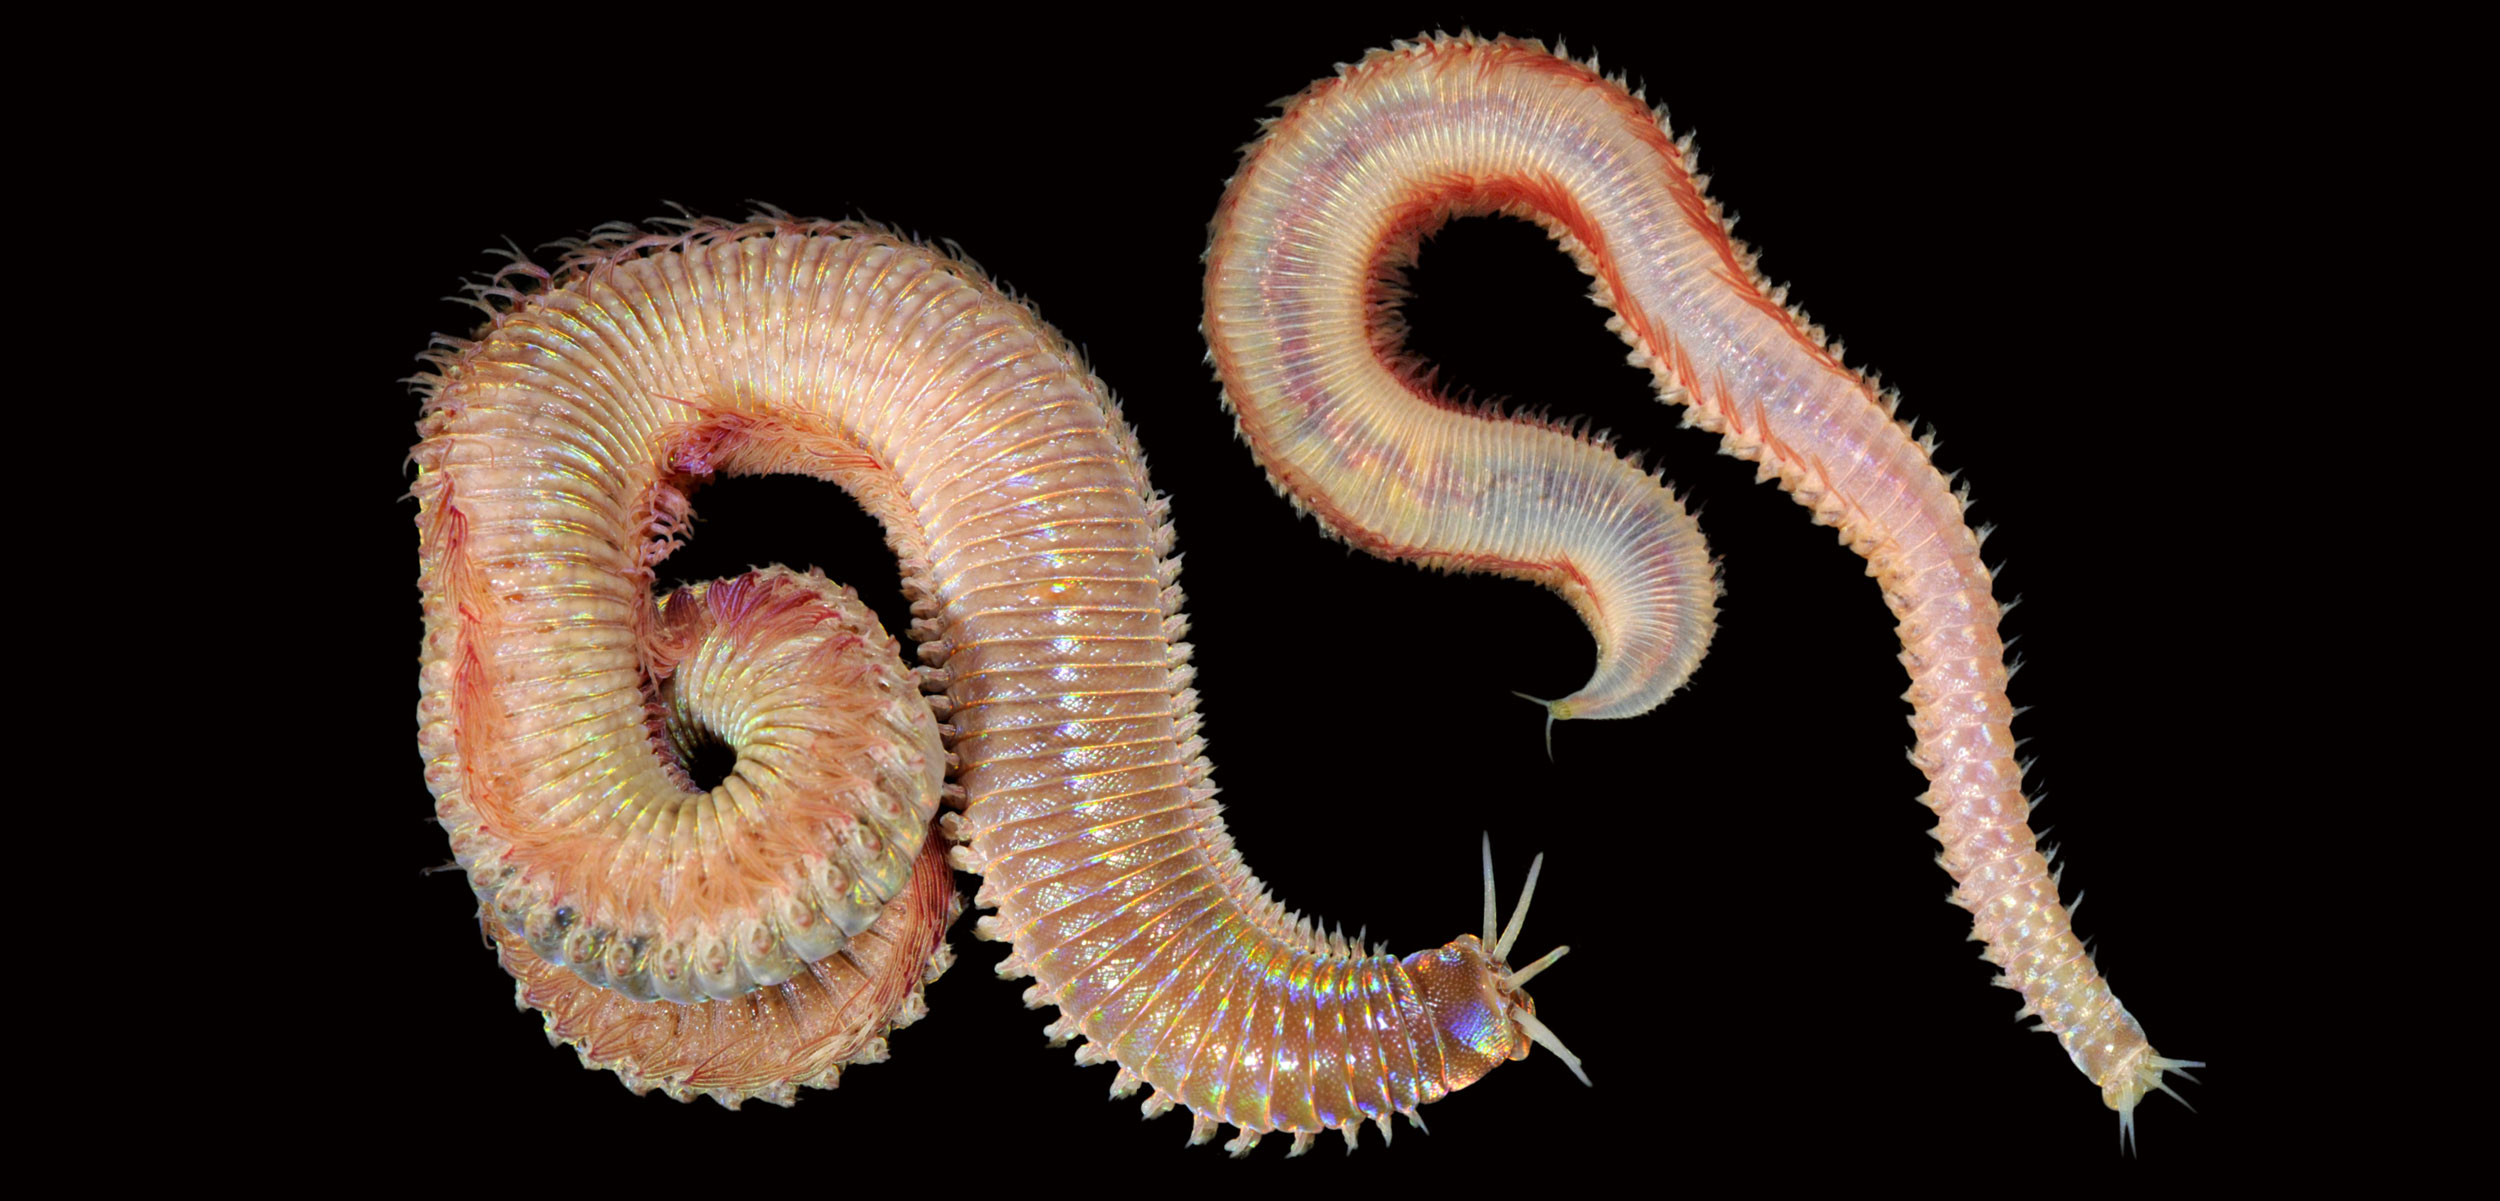 Marphysa sanguinea polychaete worms